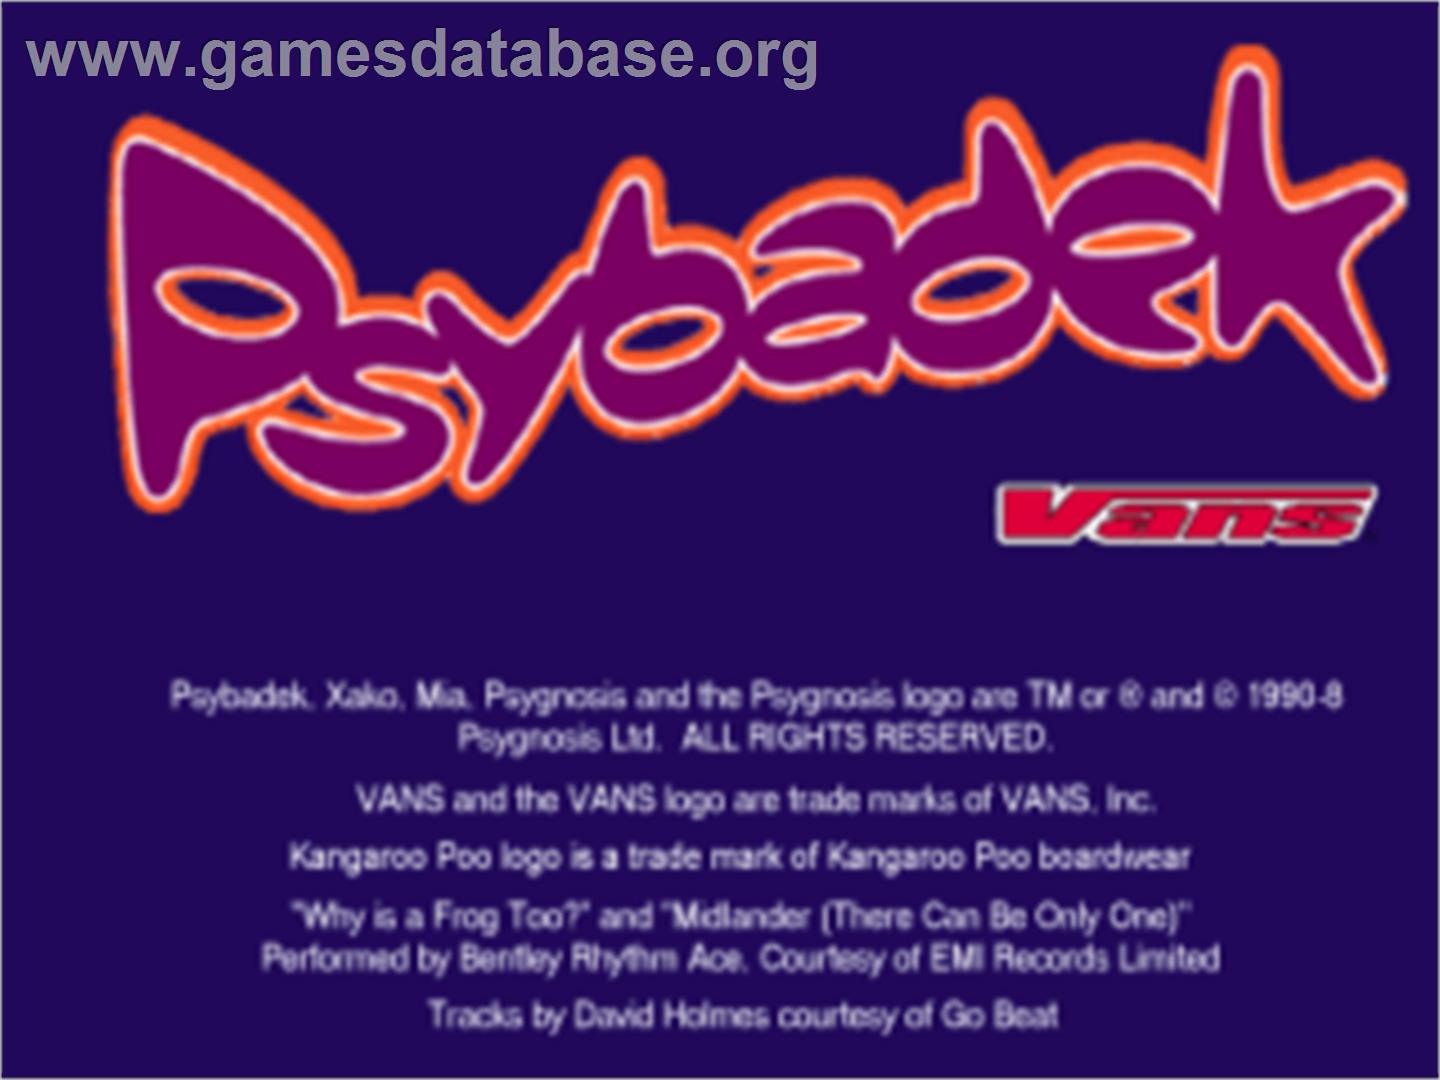 Psybadek - Sony Playstation - Artwork - Title Screen